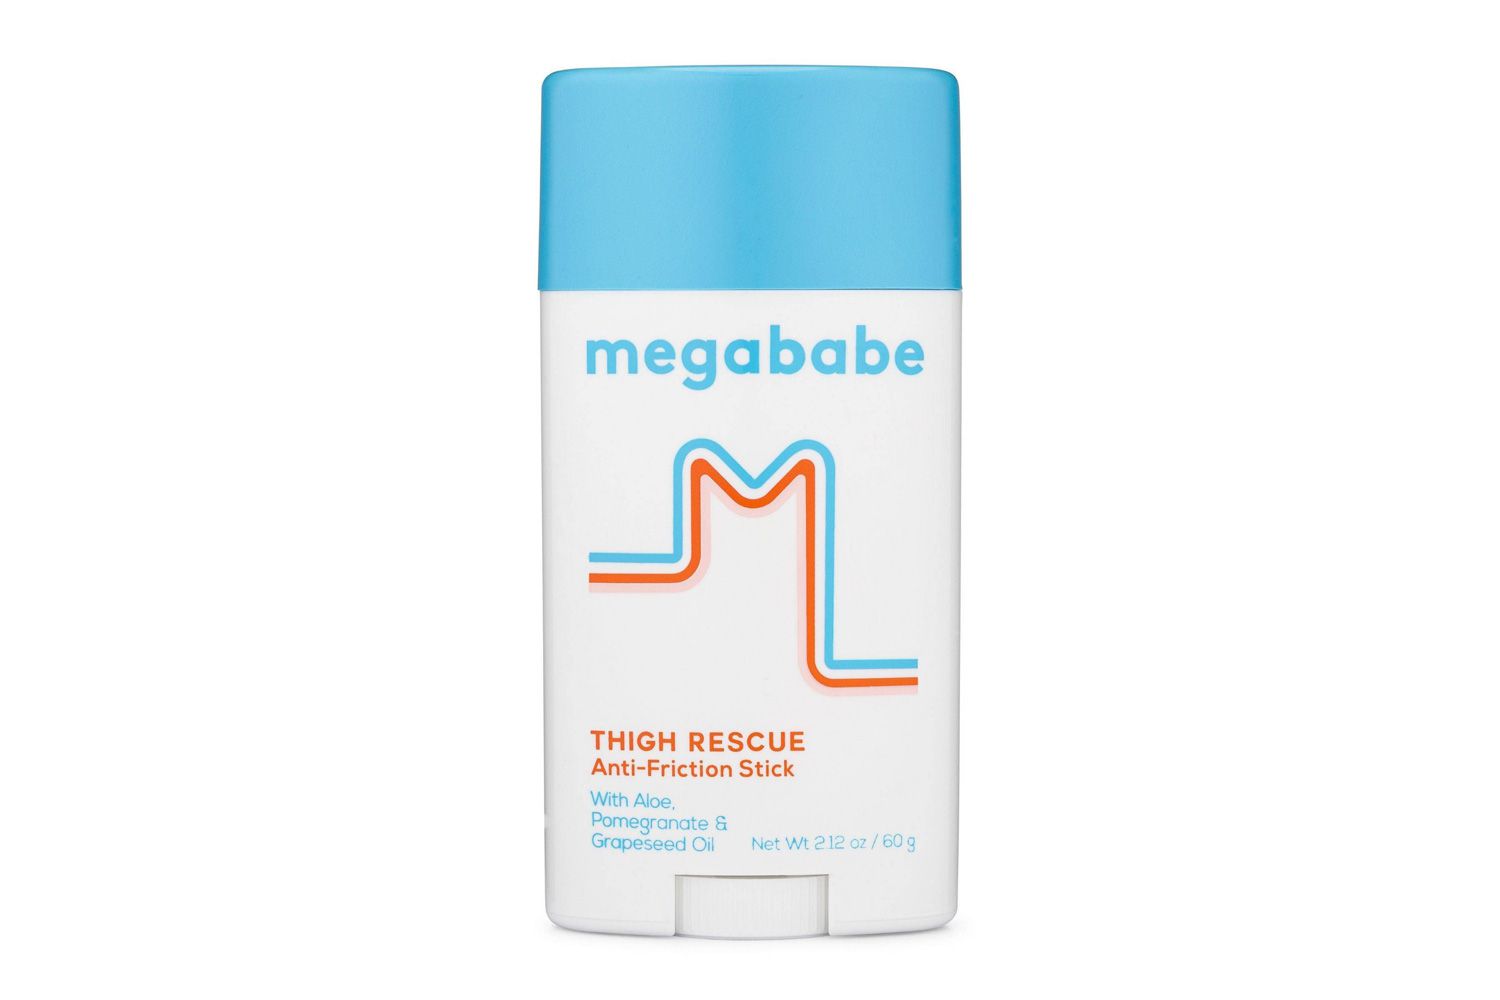 Megababe Thigh Rescue Anti-Friction Stick